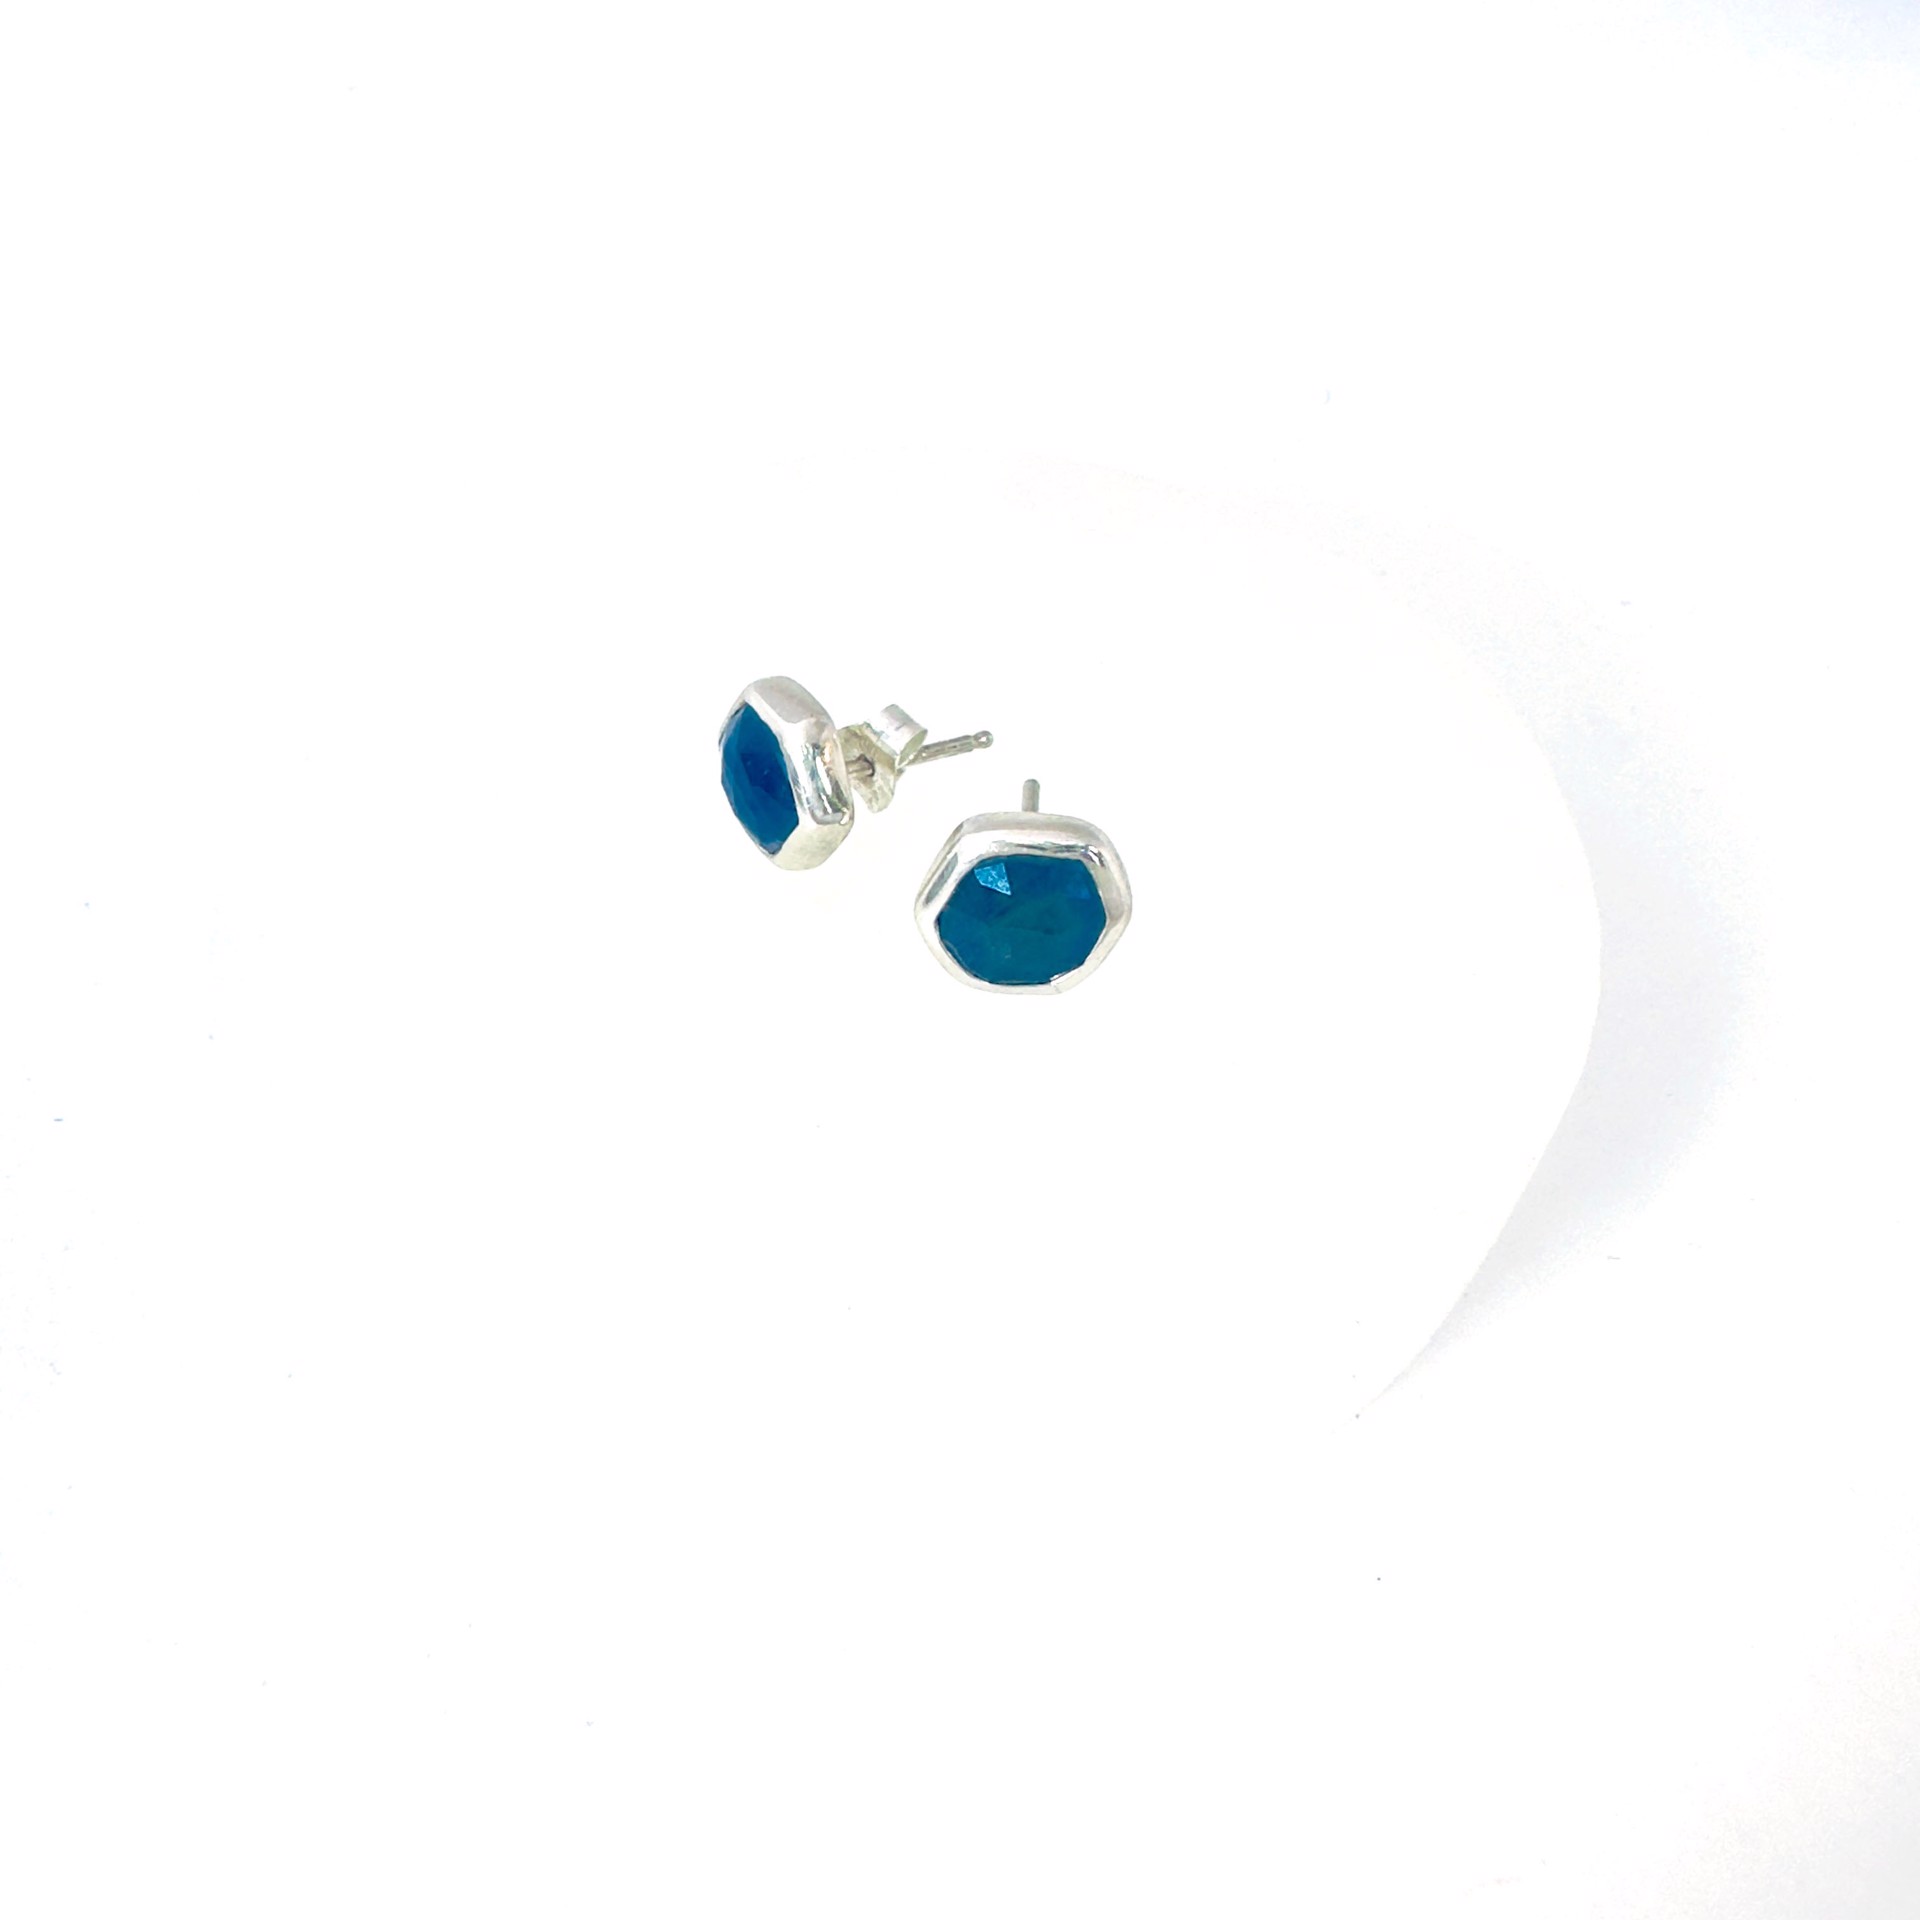 Blue Sapphire Studs - 4.5 carats by Sara Thompson